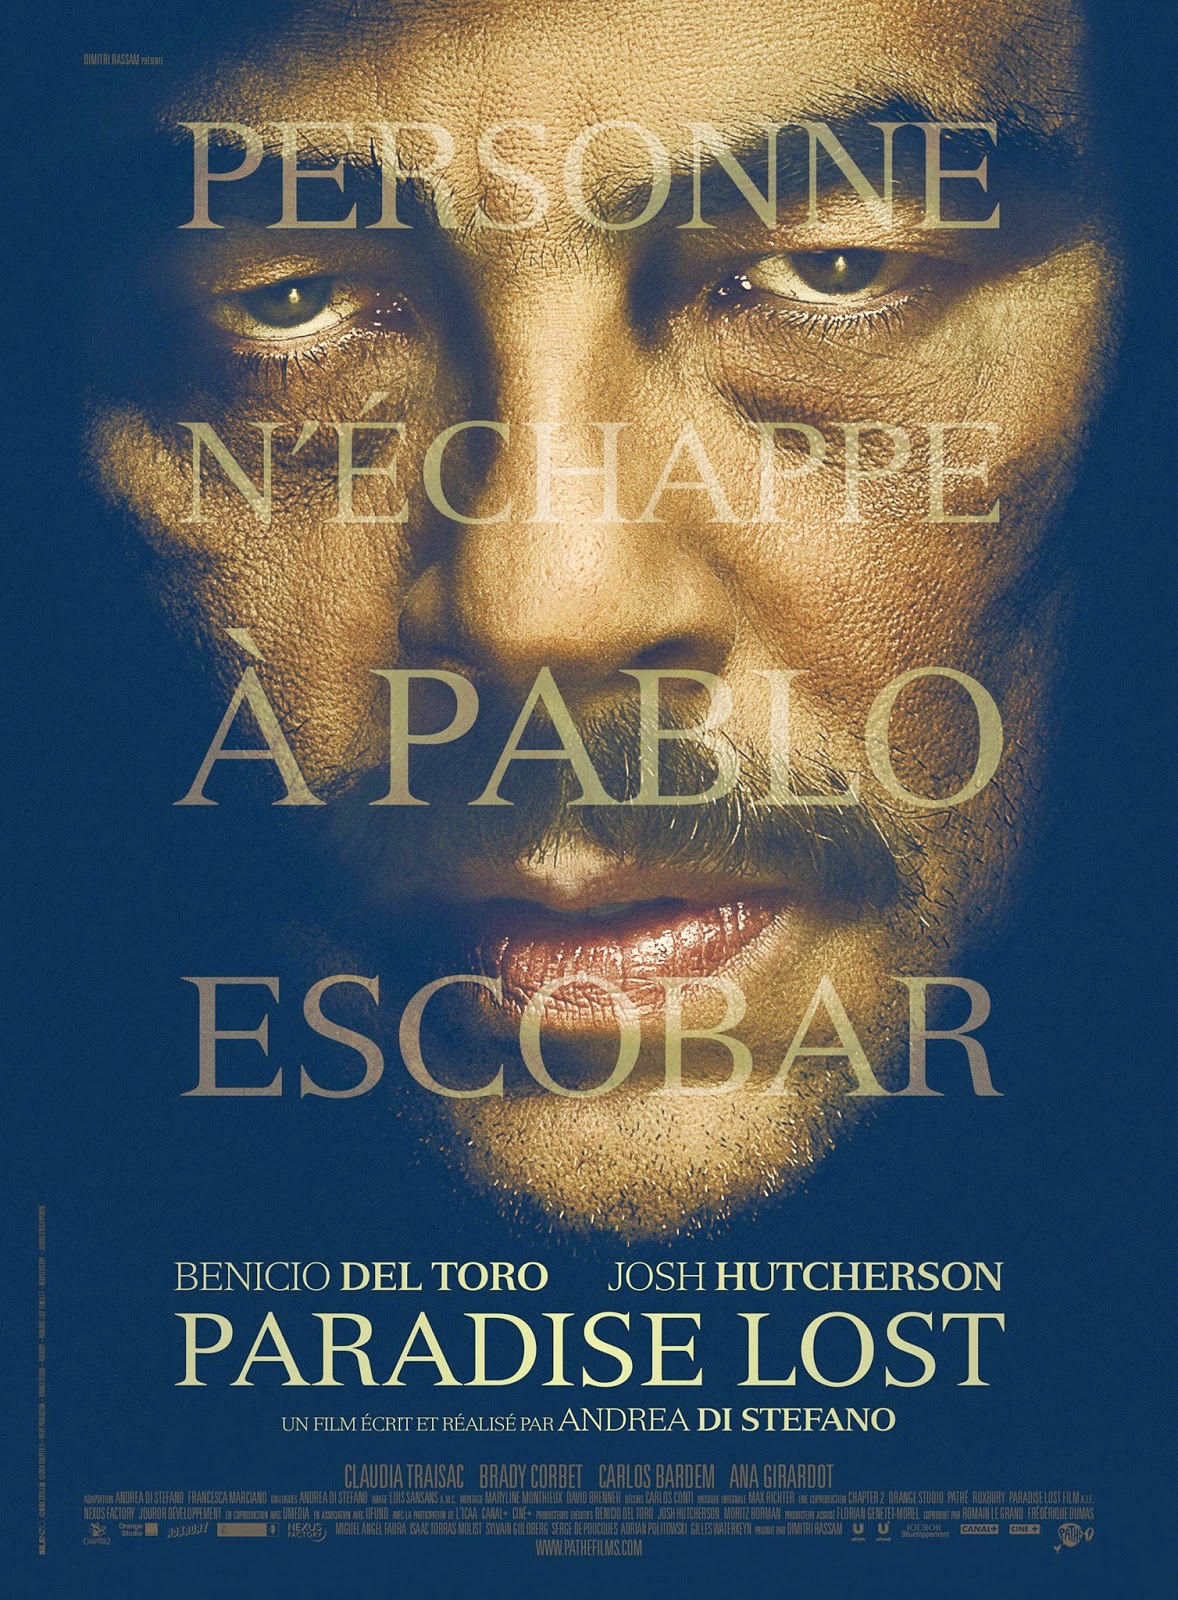 Movie Escobar: Paradise Lost (2014)